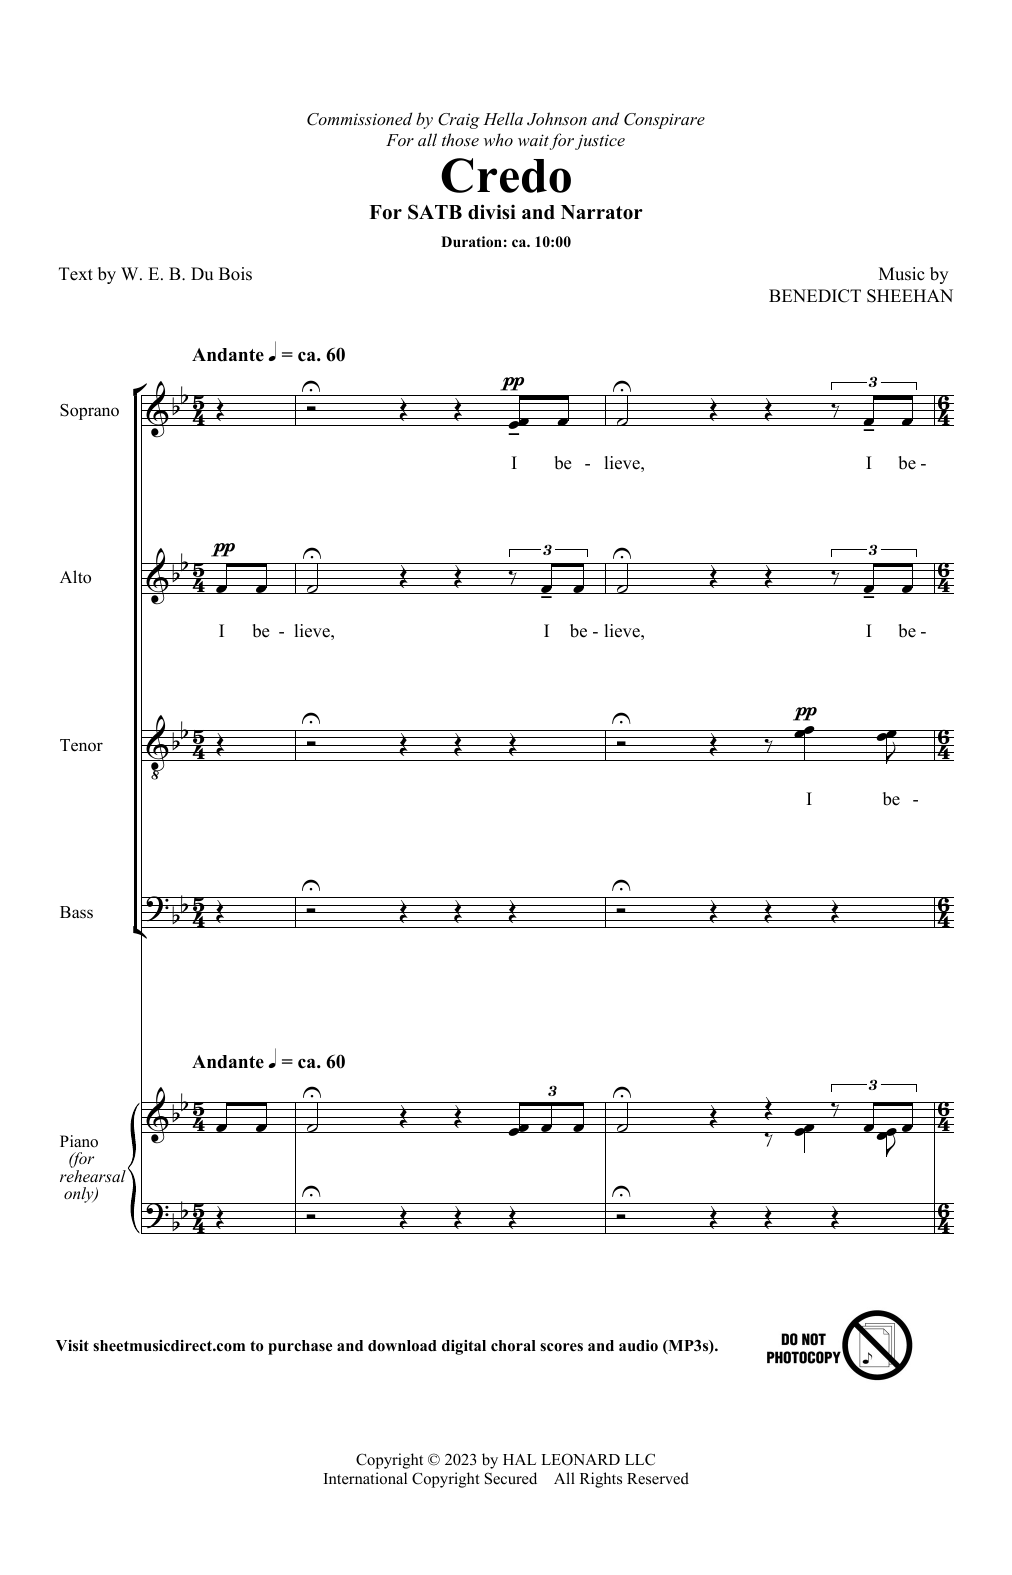 Benedict Sheehan Credo Sheet Music Notes & Chords for Choir - Download or Print PDF